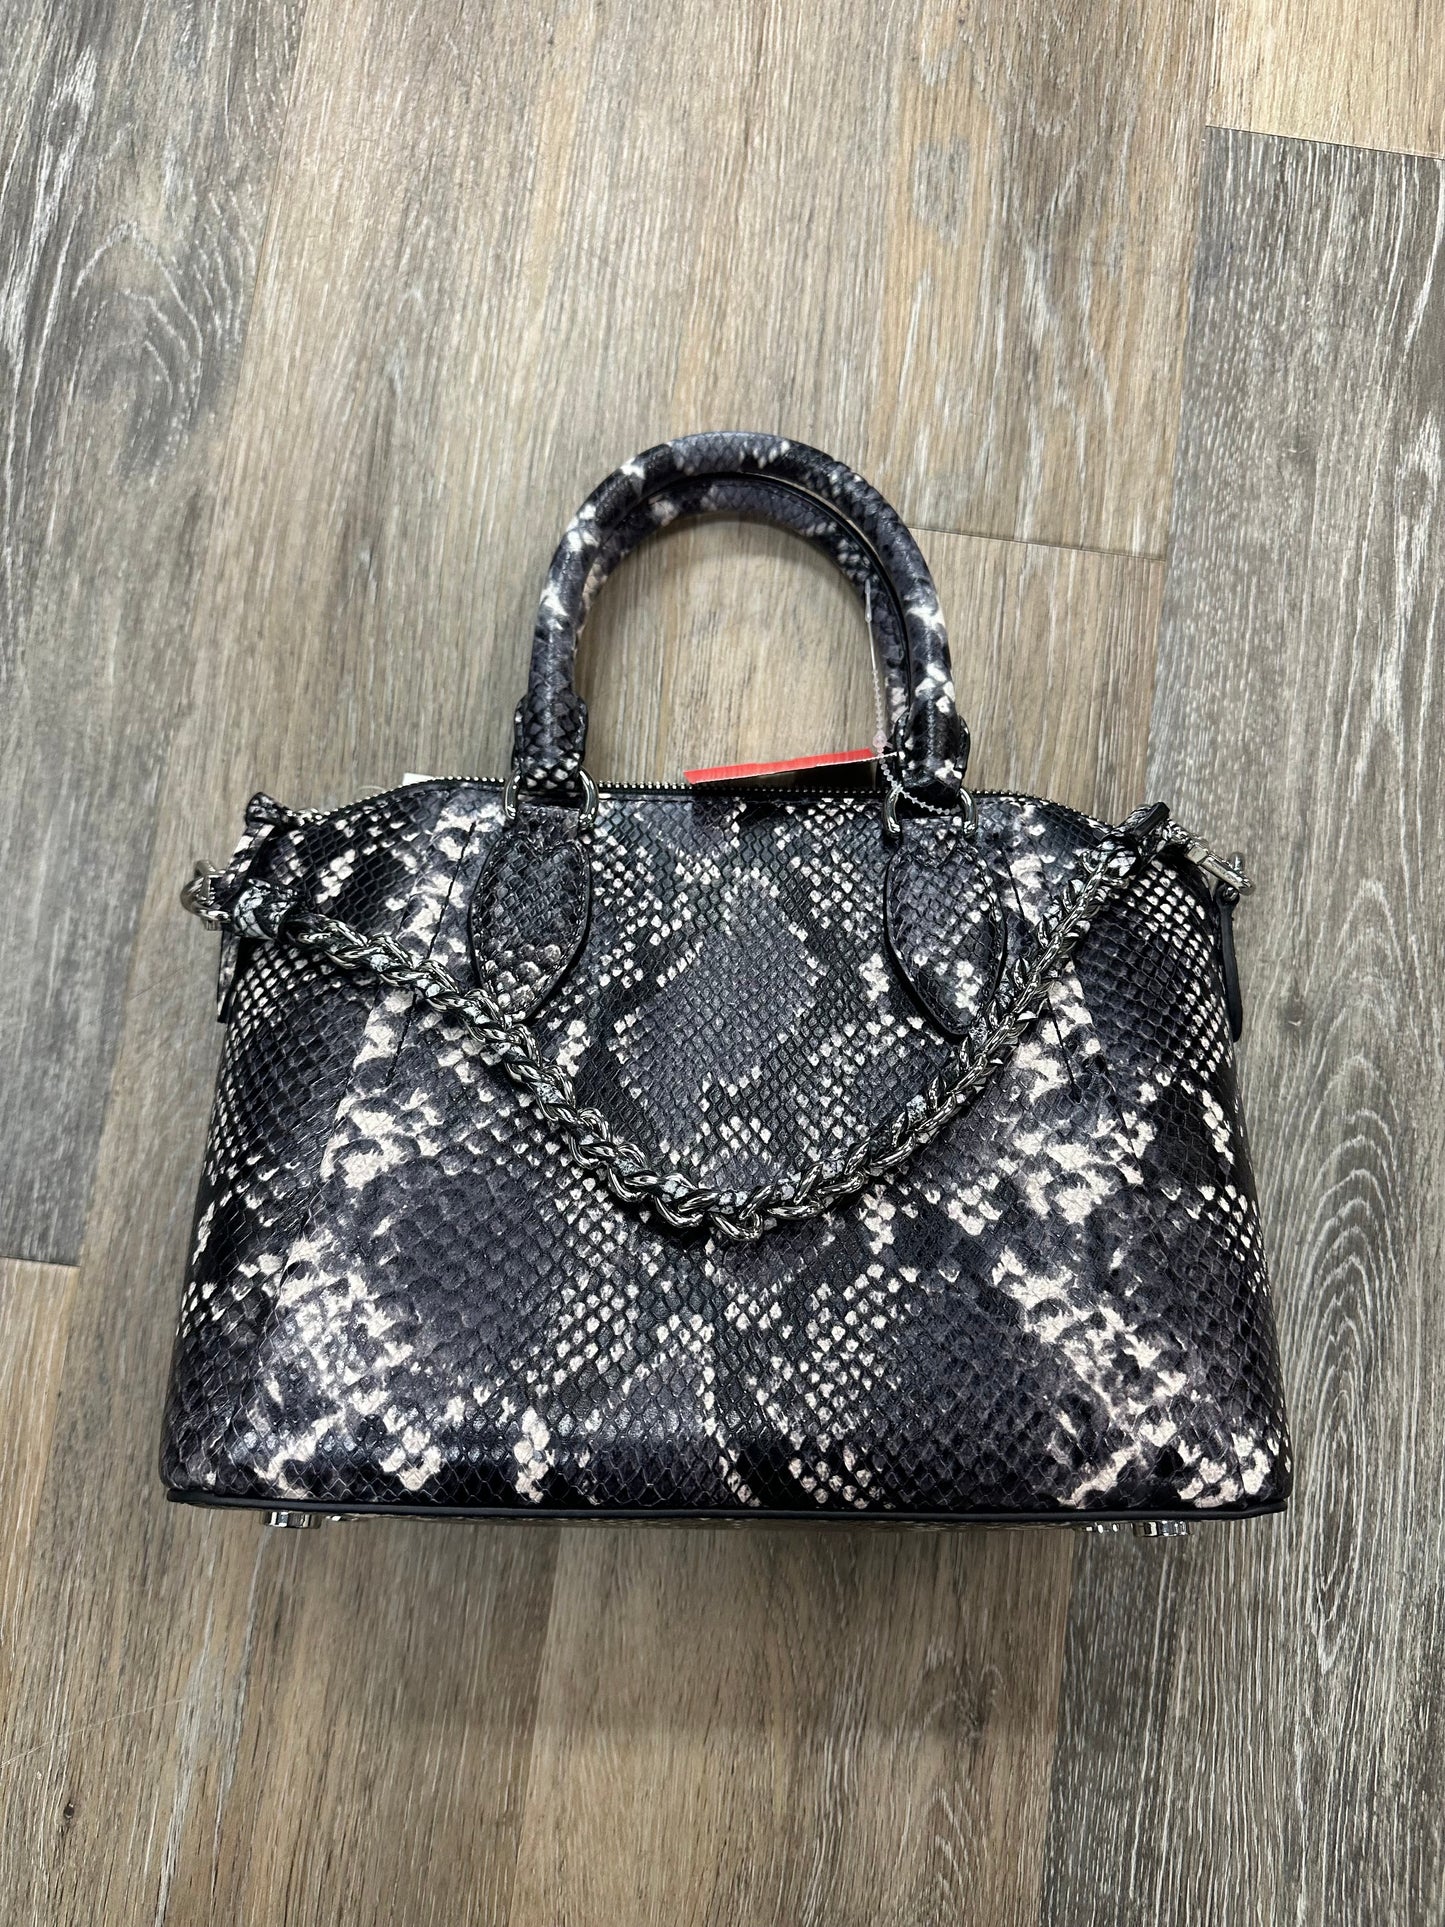 Handbag Designer Michael By Michael Kors, Size Medium